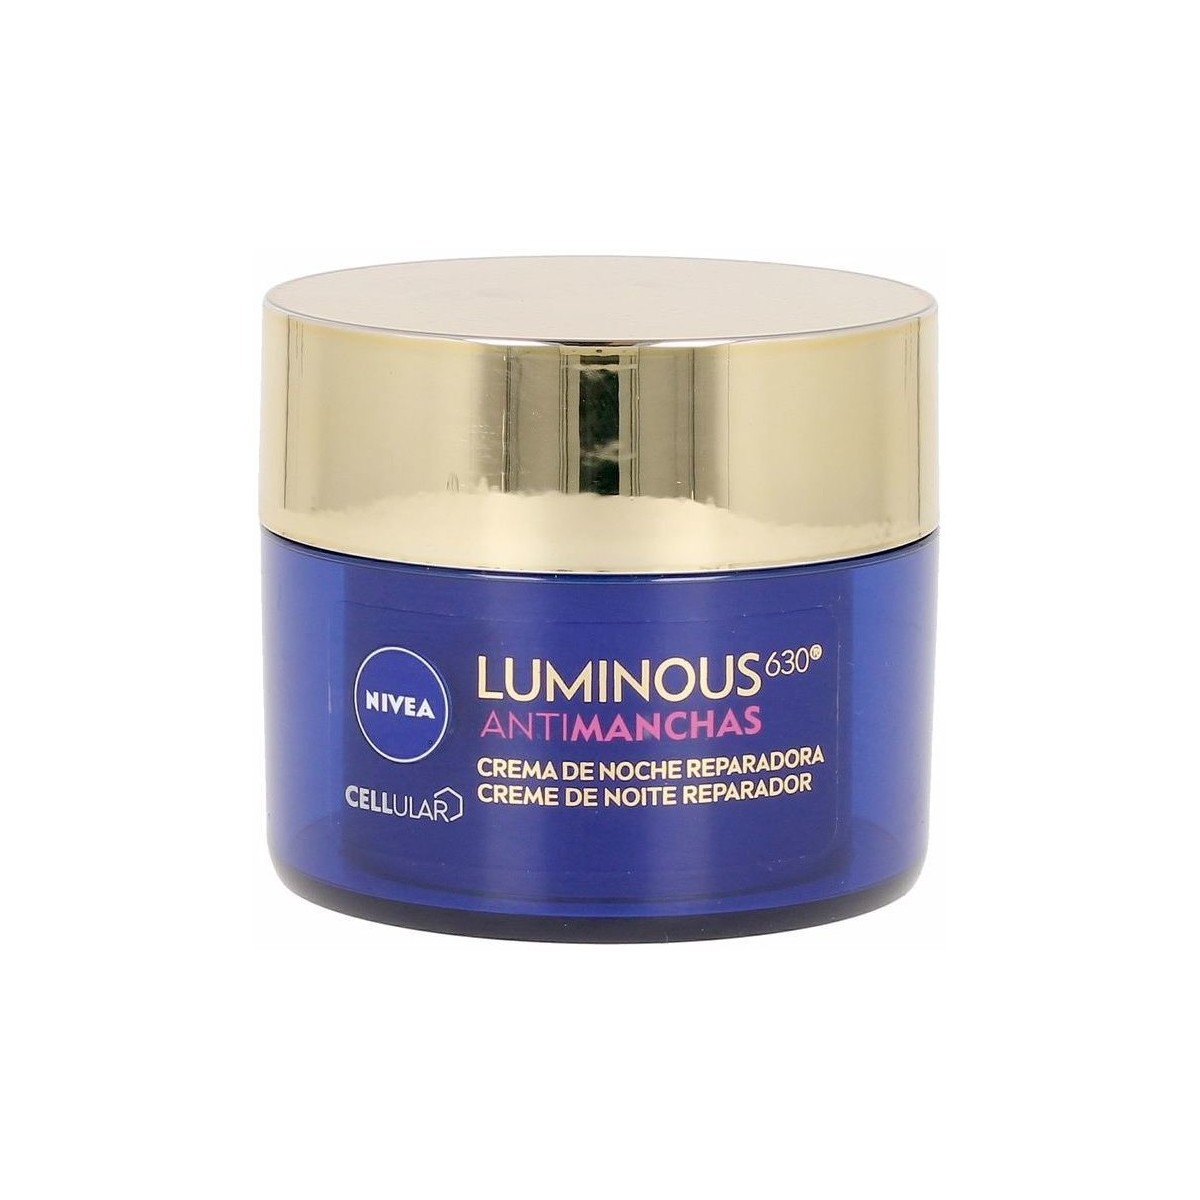 Beauty Anti-Aging & Anti-Falten Produkte Nivea Luminous 630º Antimanchas Crema Noche Reparadora 